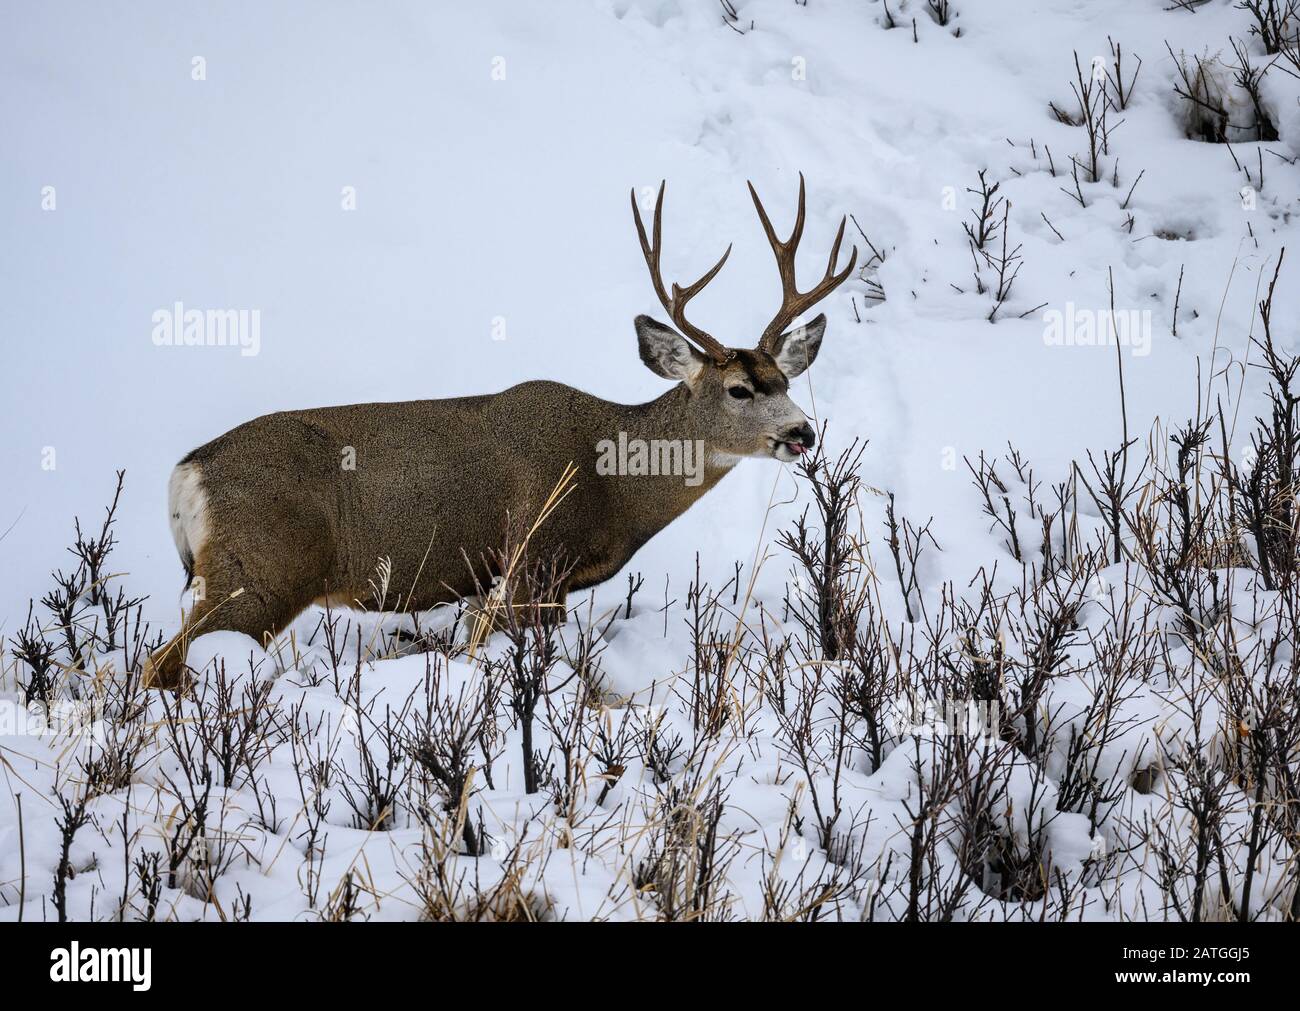 A Mule deer (Odocoileus hemionus) buck grazing in snow. Yellowstone National Park, Wyoming, USA. Stock Photo